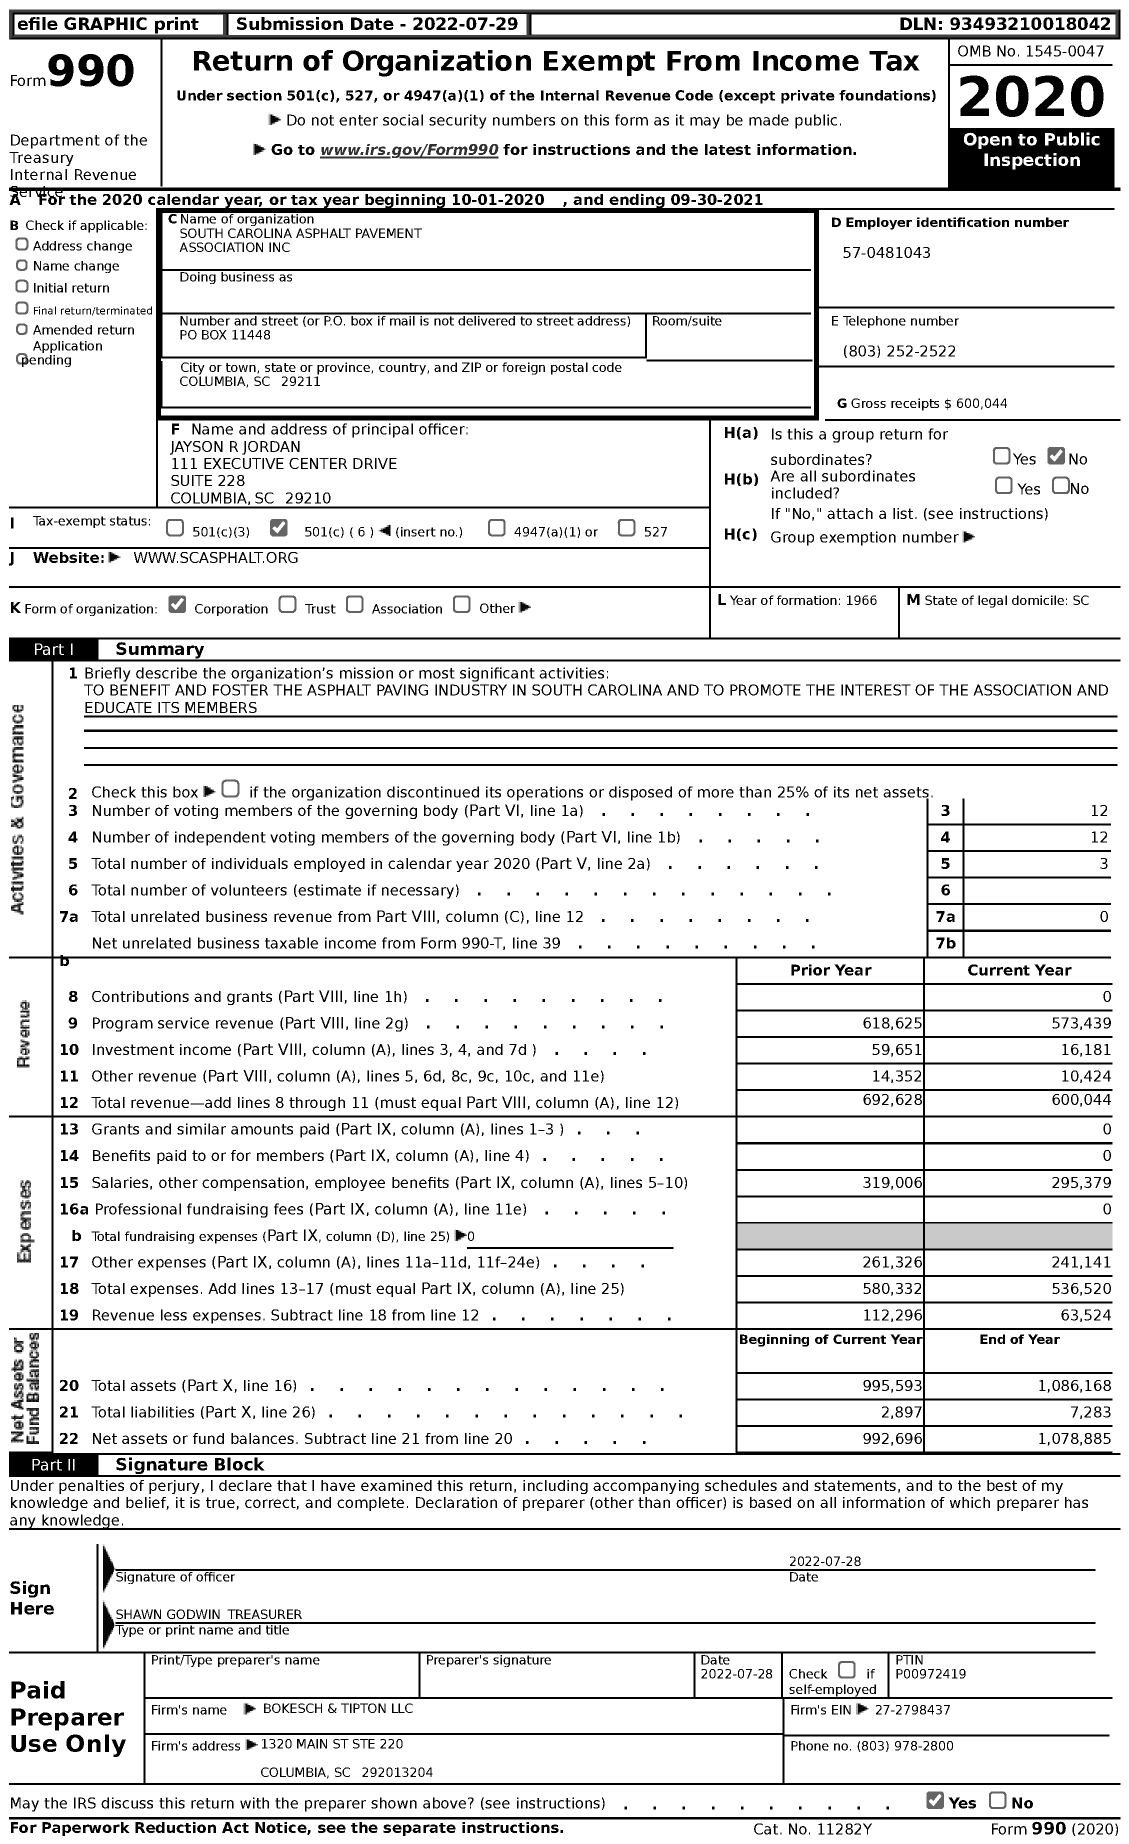 Image of first page of 2020 Form 990 for South Carolina Asphalt Pavement Association